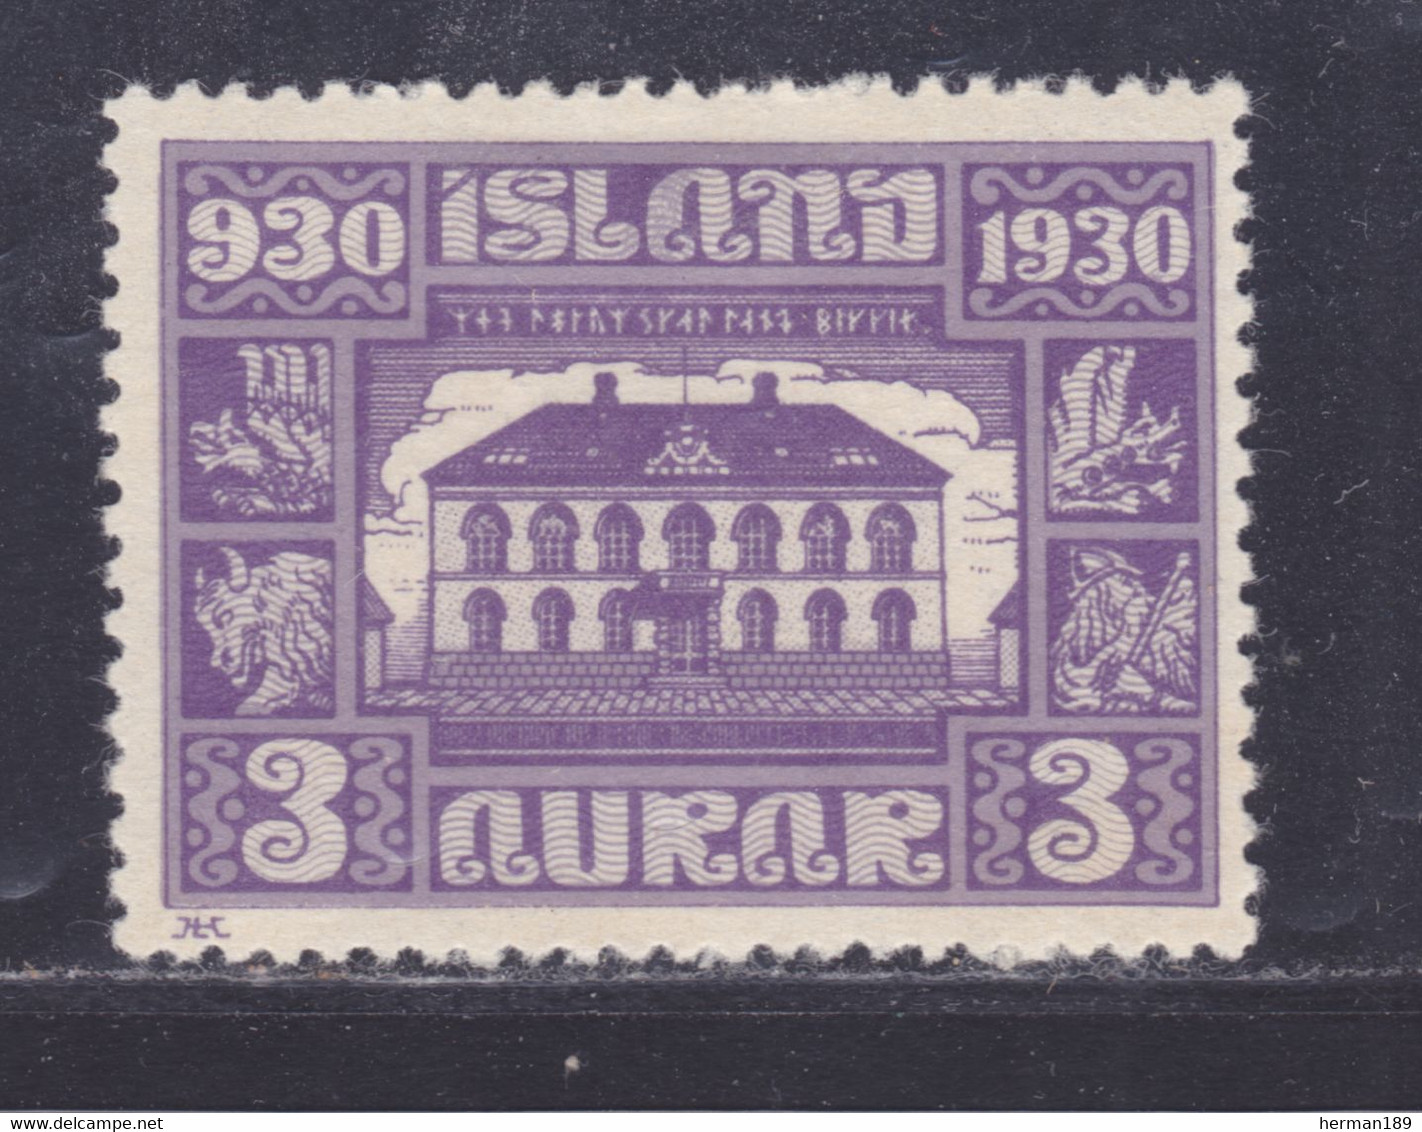 ISLANDE N°  123 * MLH Neuf Avec Charnière, TB (D9270) Le Parlement à Reykjavik - 1930 - Ongebruikt